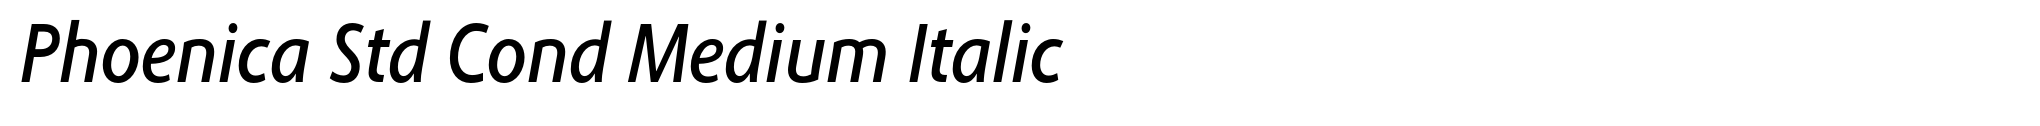 Phoenica Std Cond Medium Italic image